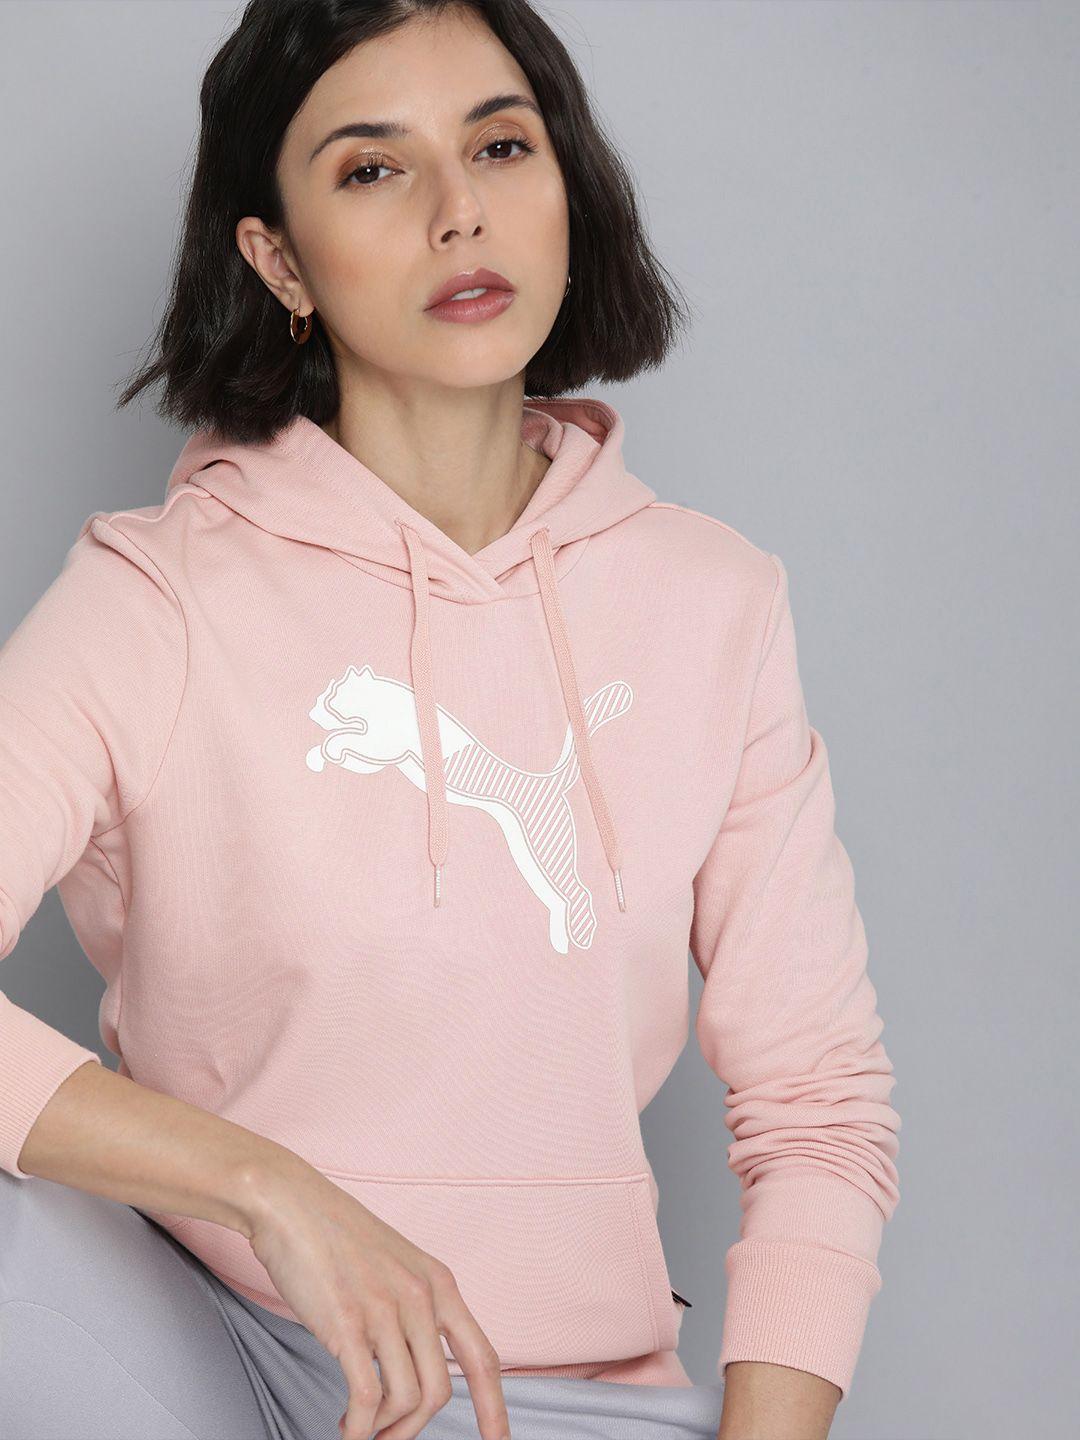 puma women pink & white power graphic printed hooded sweatshirt